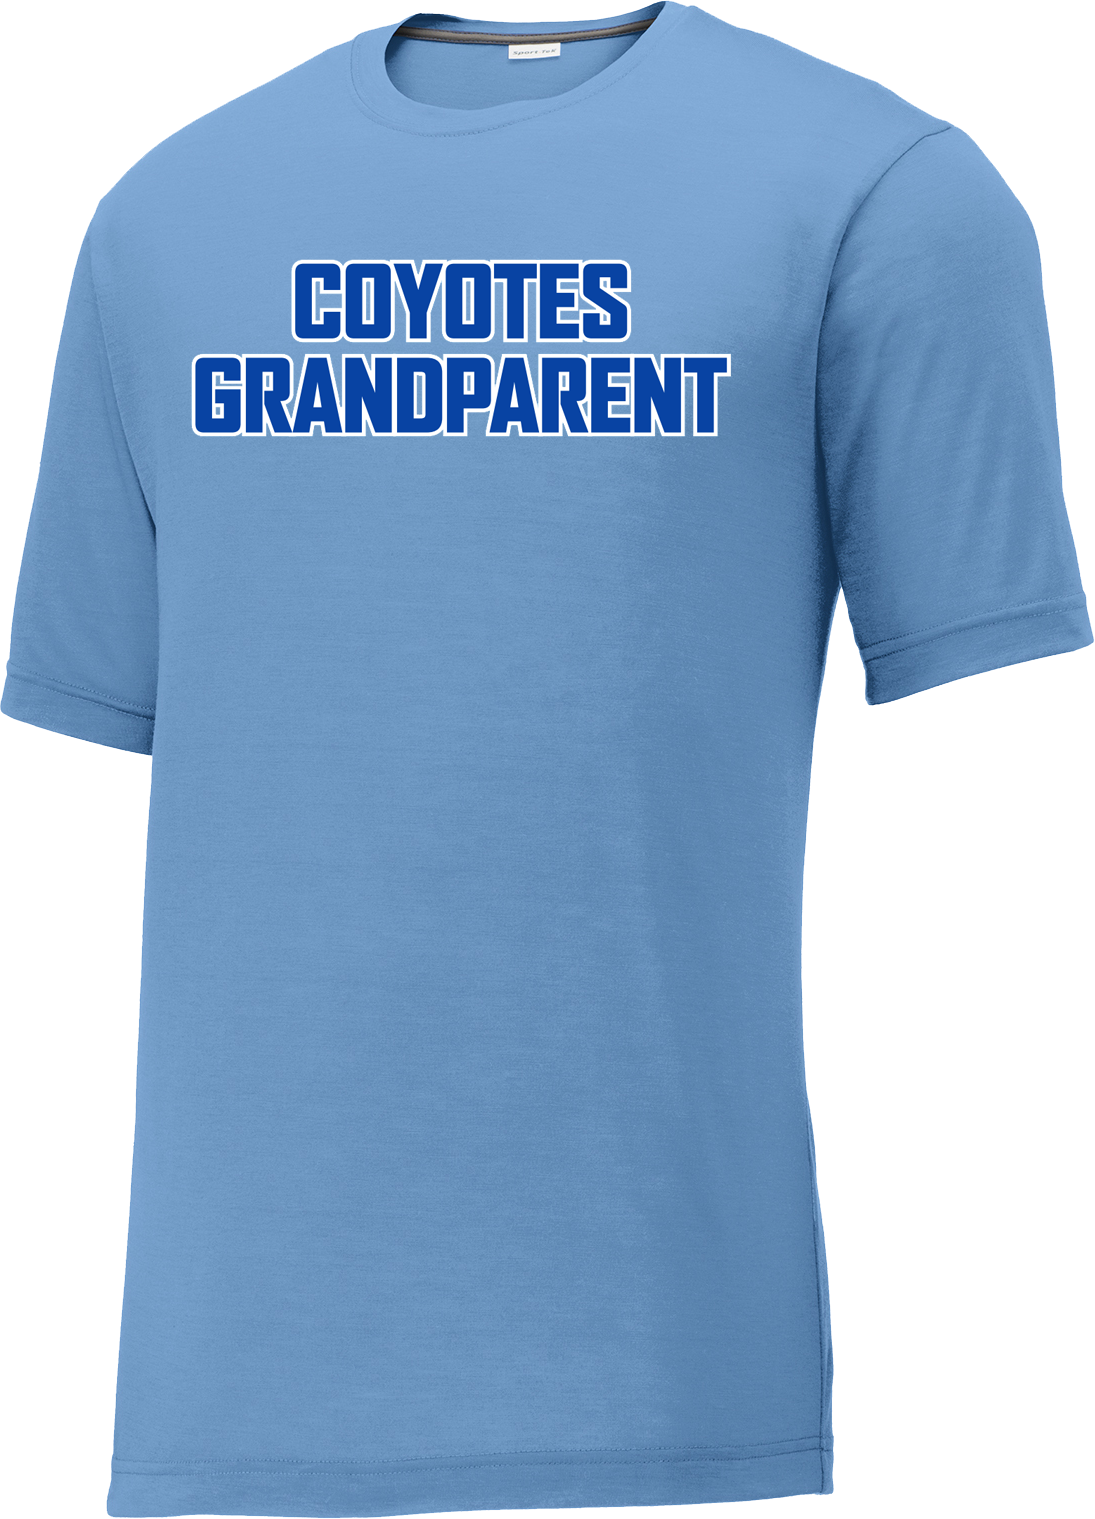 Coyotes Grandparent CottonTouch Performance T-Shirt